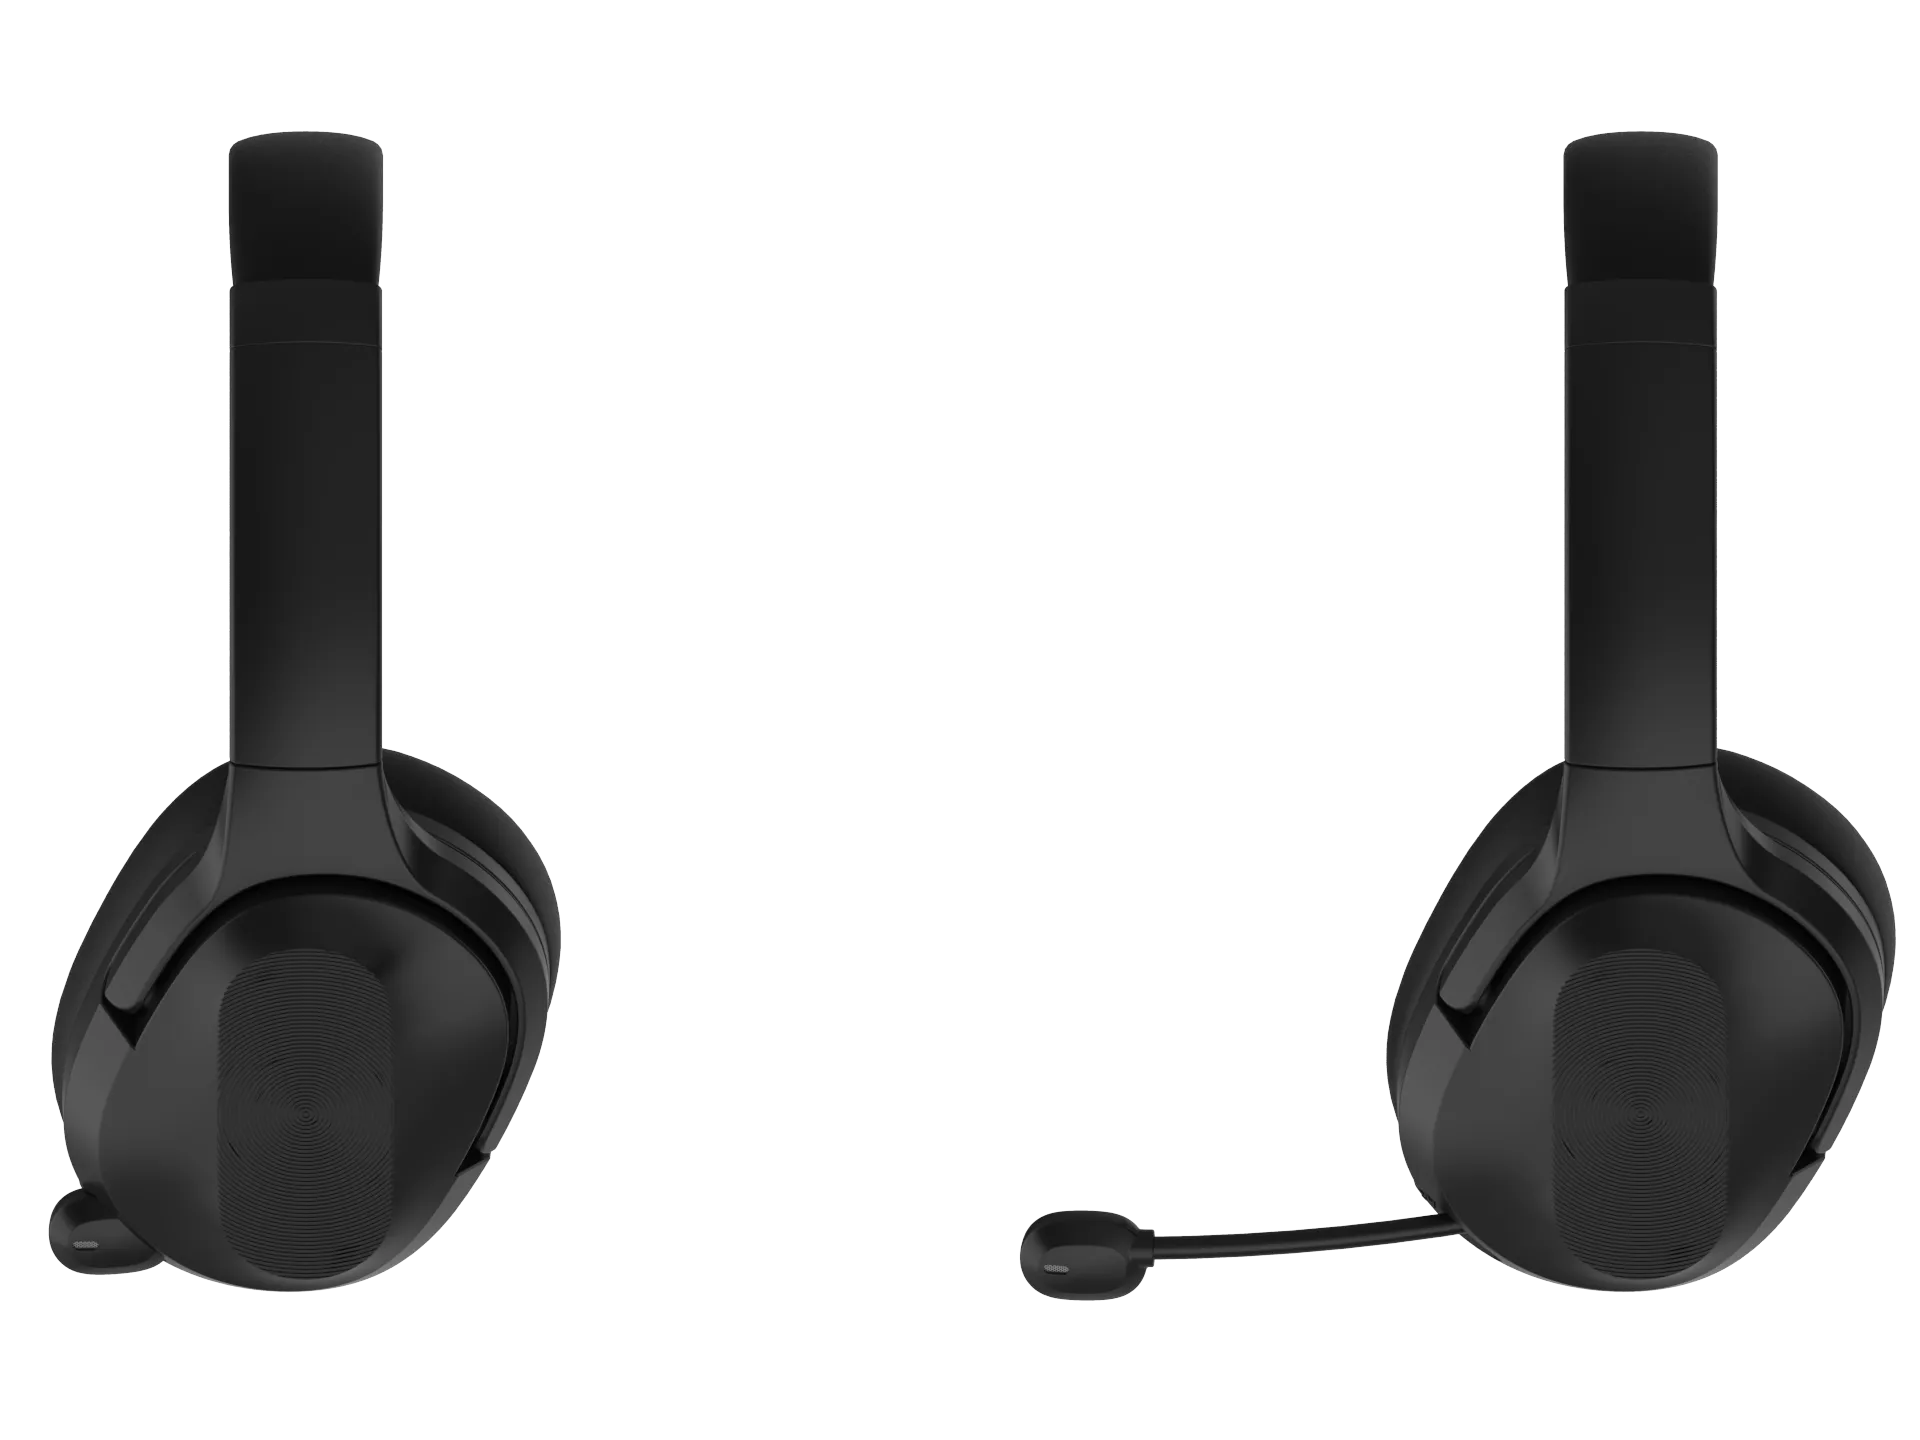 2.4G bluetooth wireless gaming headphone